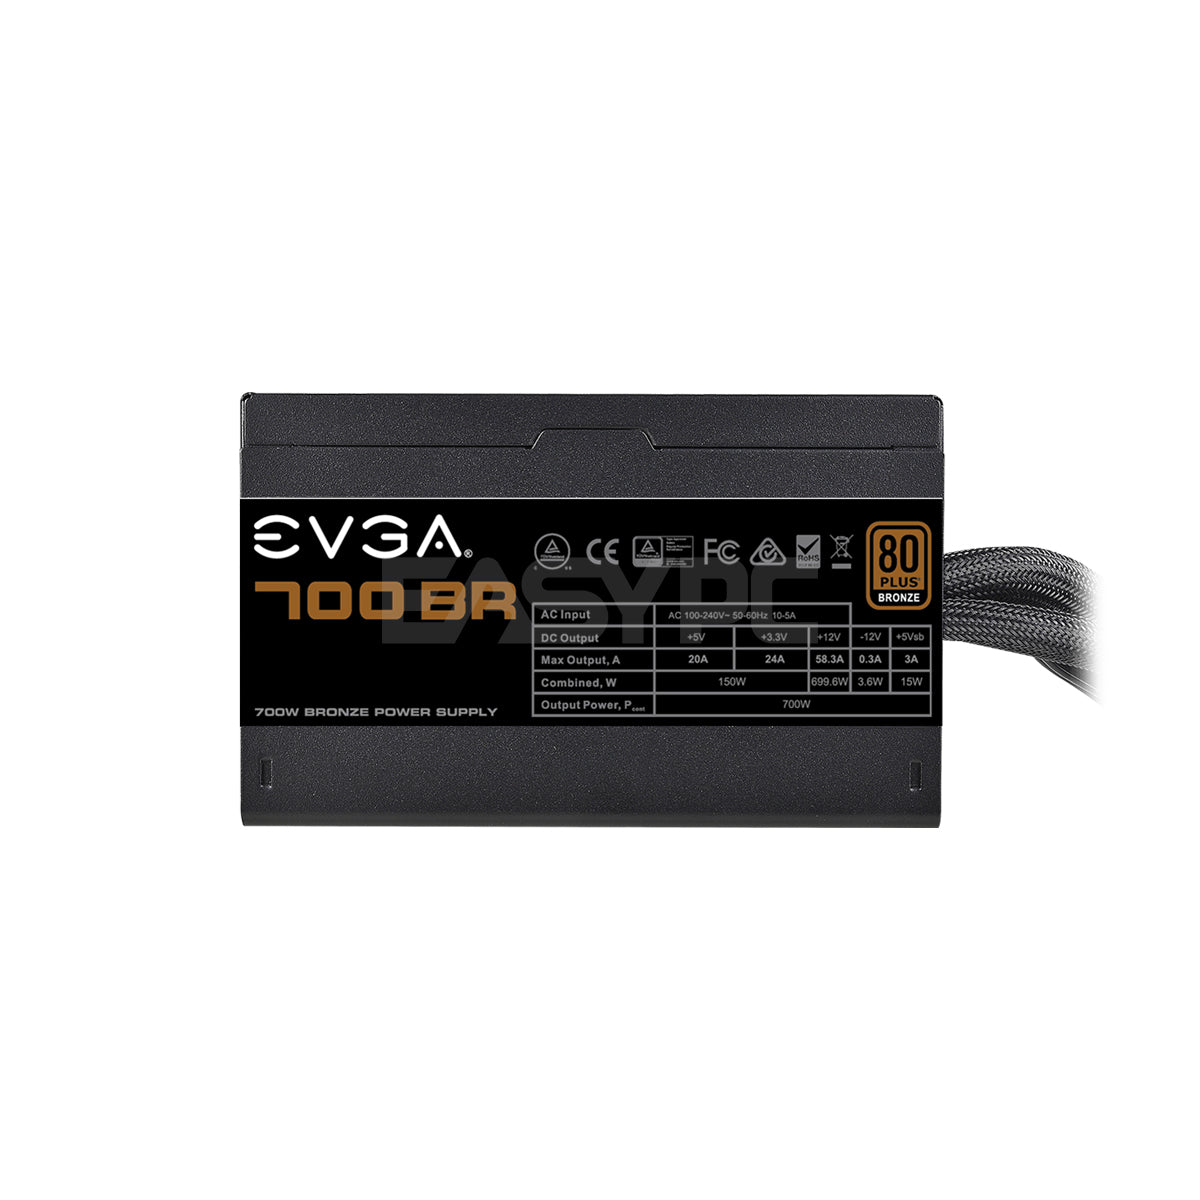 EVGA 700BR 700watts 80 Plus Bronze Power Supply